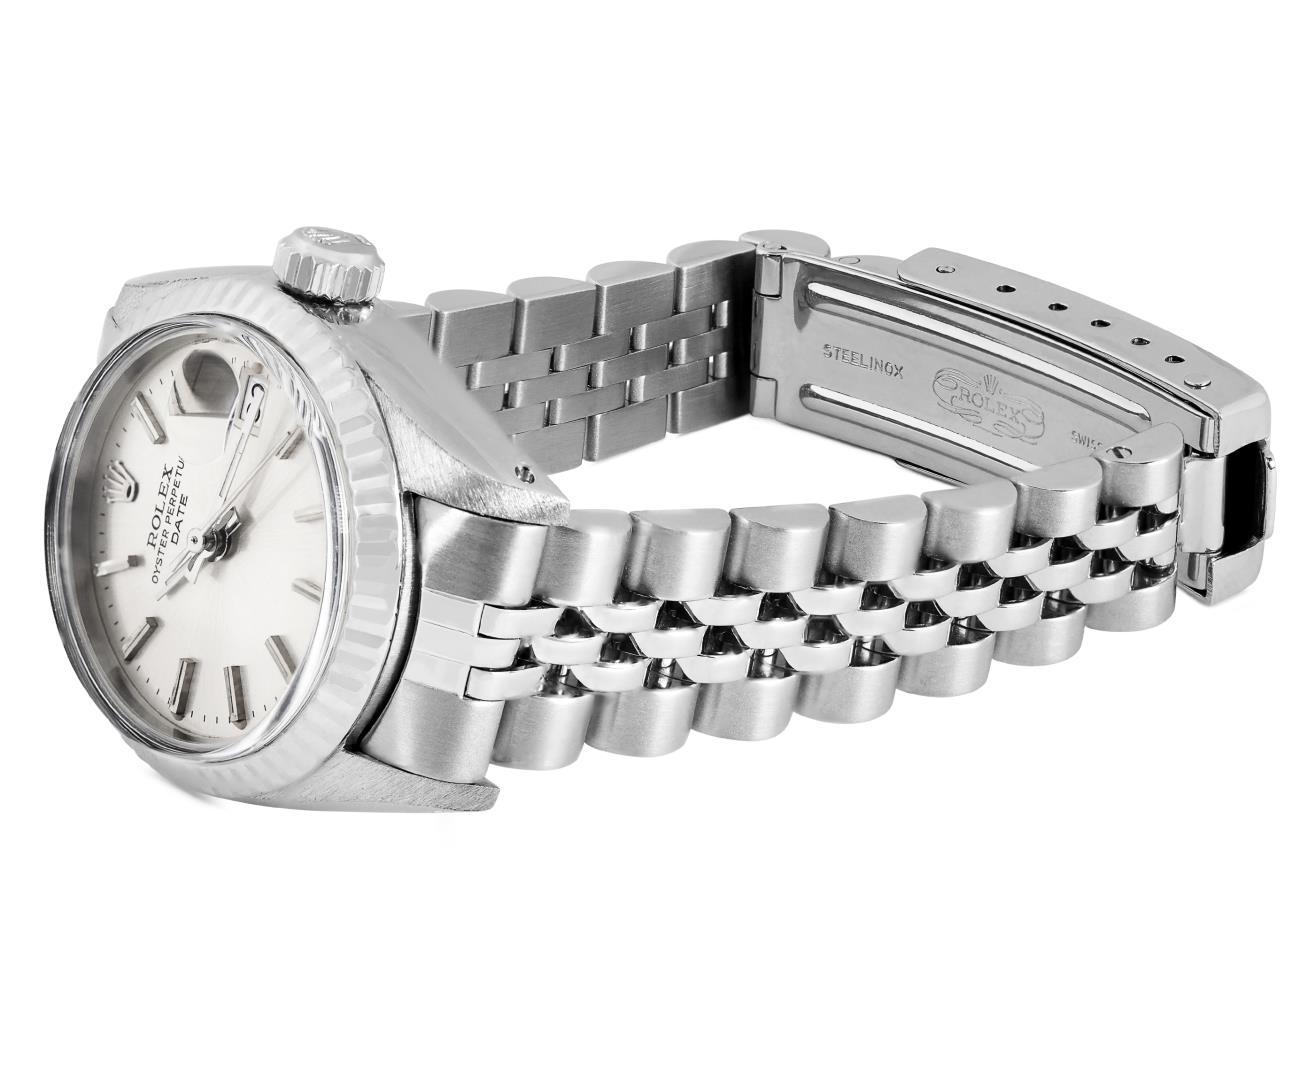 Rolex Ladies Stainless Steel Silver Index Date Watch With Rolex Box